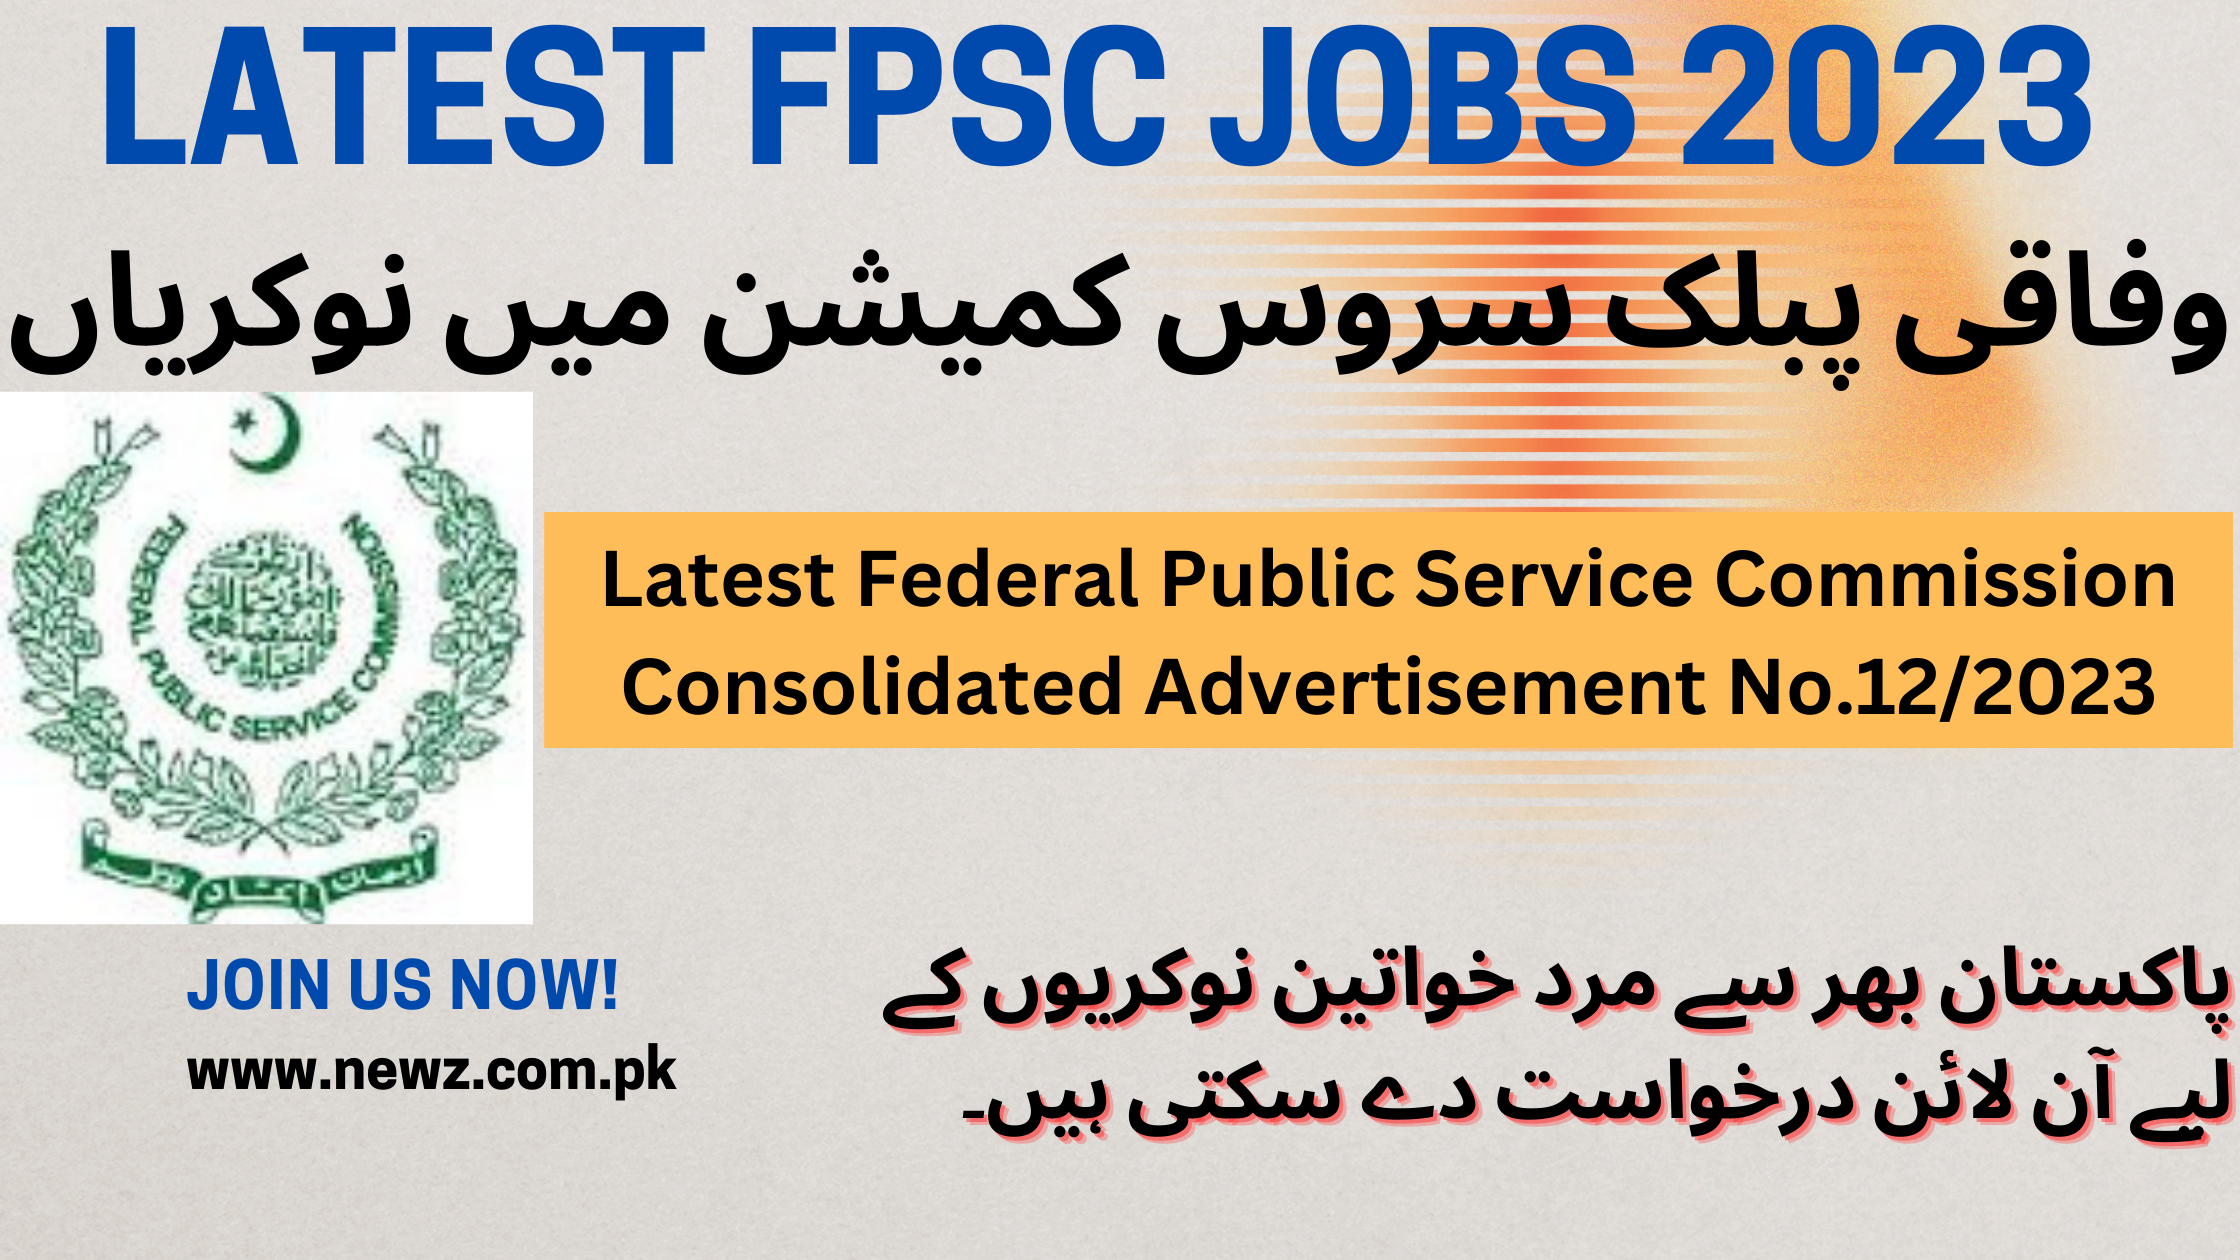 LATEST FPSC JOBS 2023